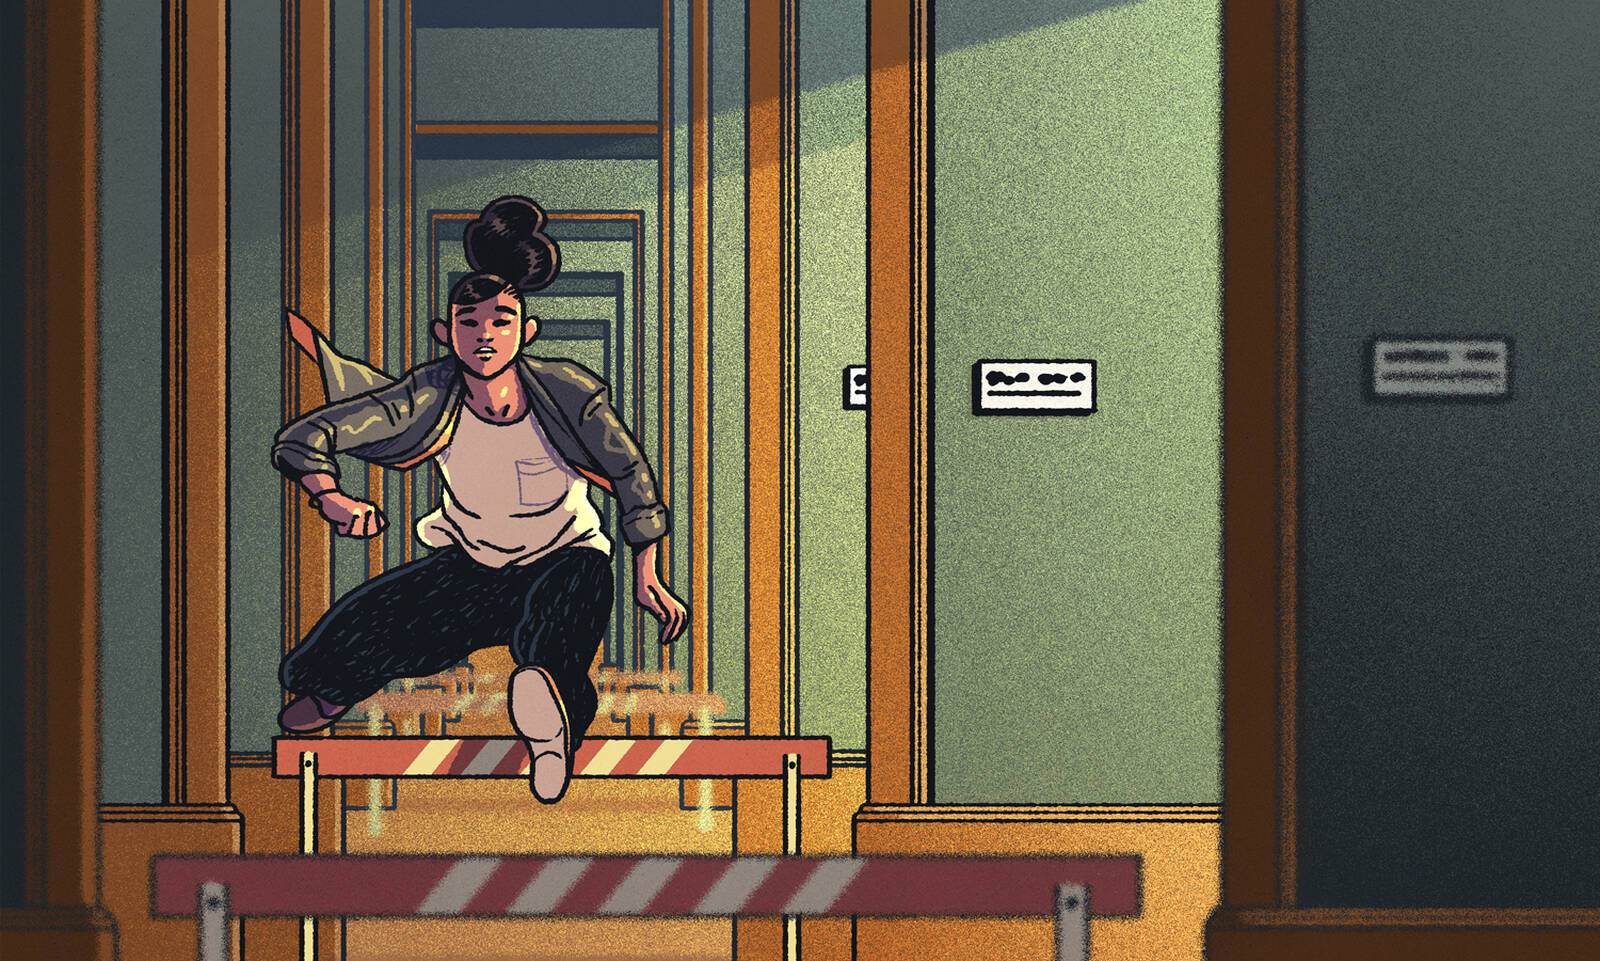 Woman leaps hurdles in office hallway